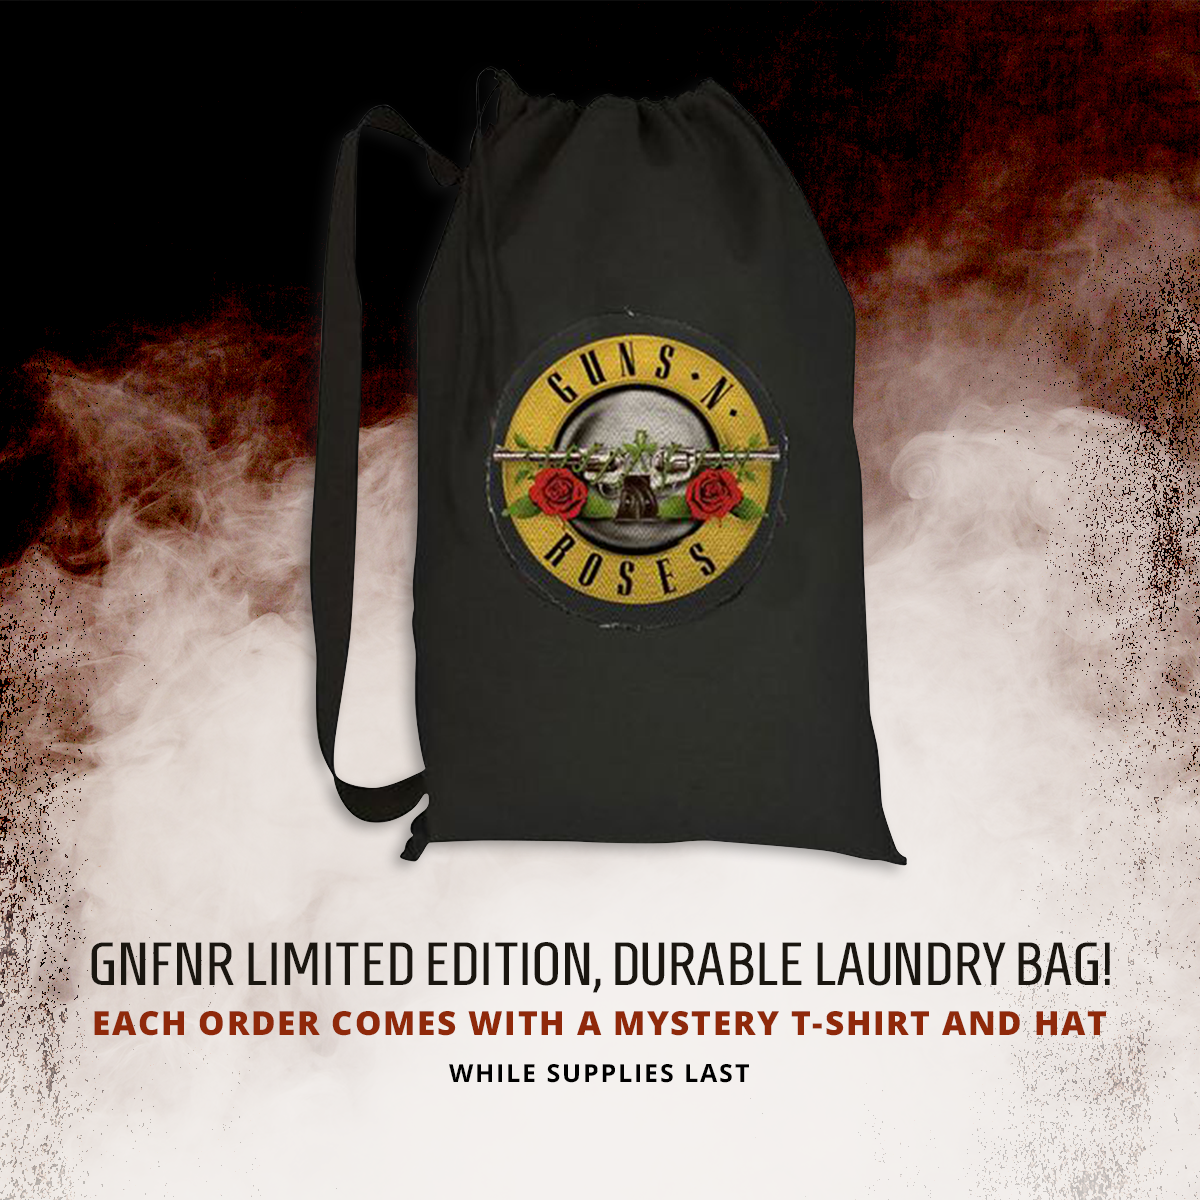 Guns N Roses - Mystery Bundle Laundry Bag